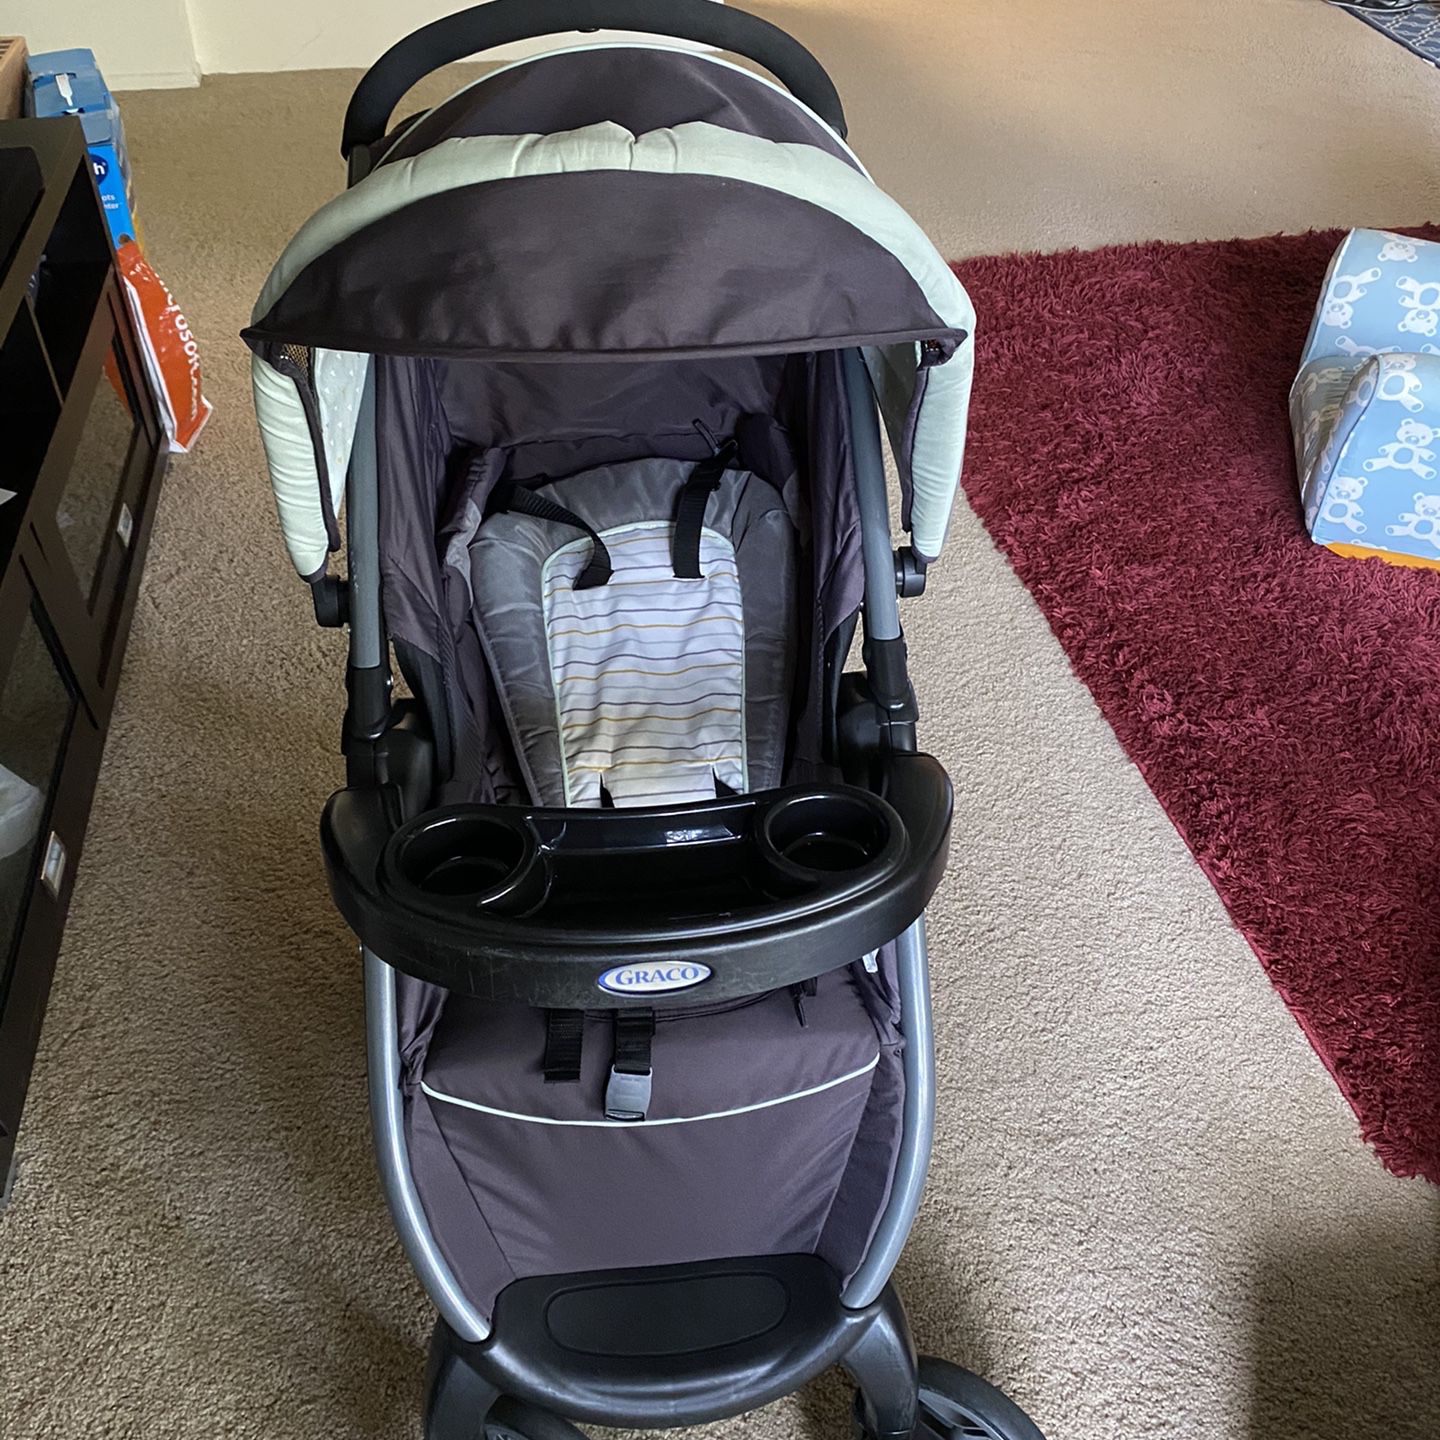 Graco Baby Travel System (Sunridge 30) for $40